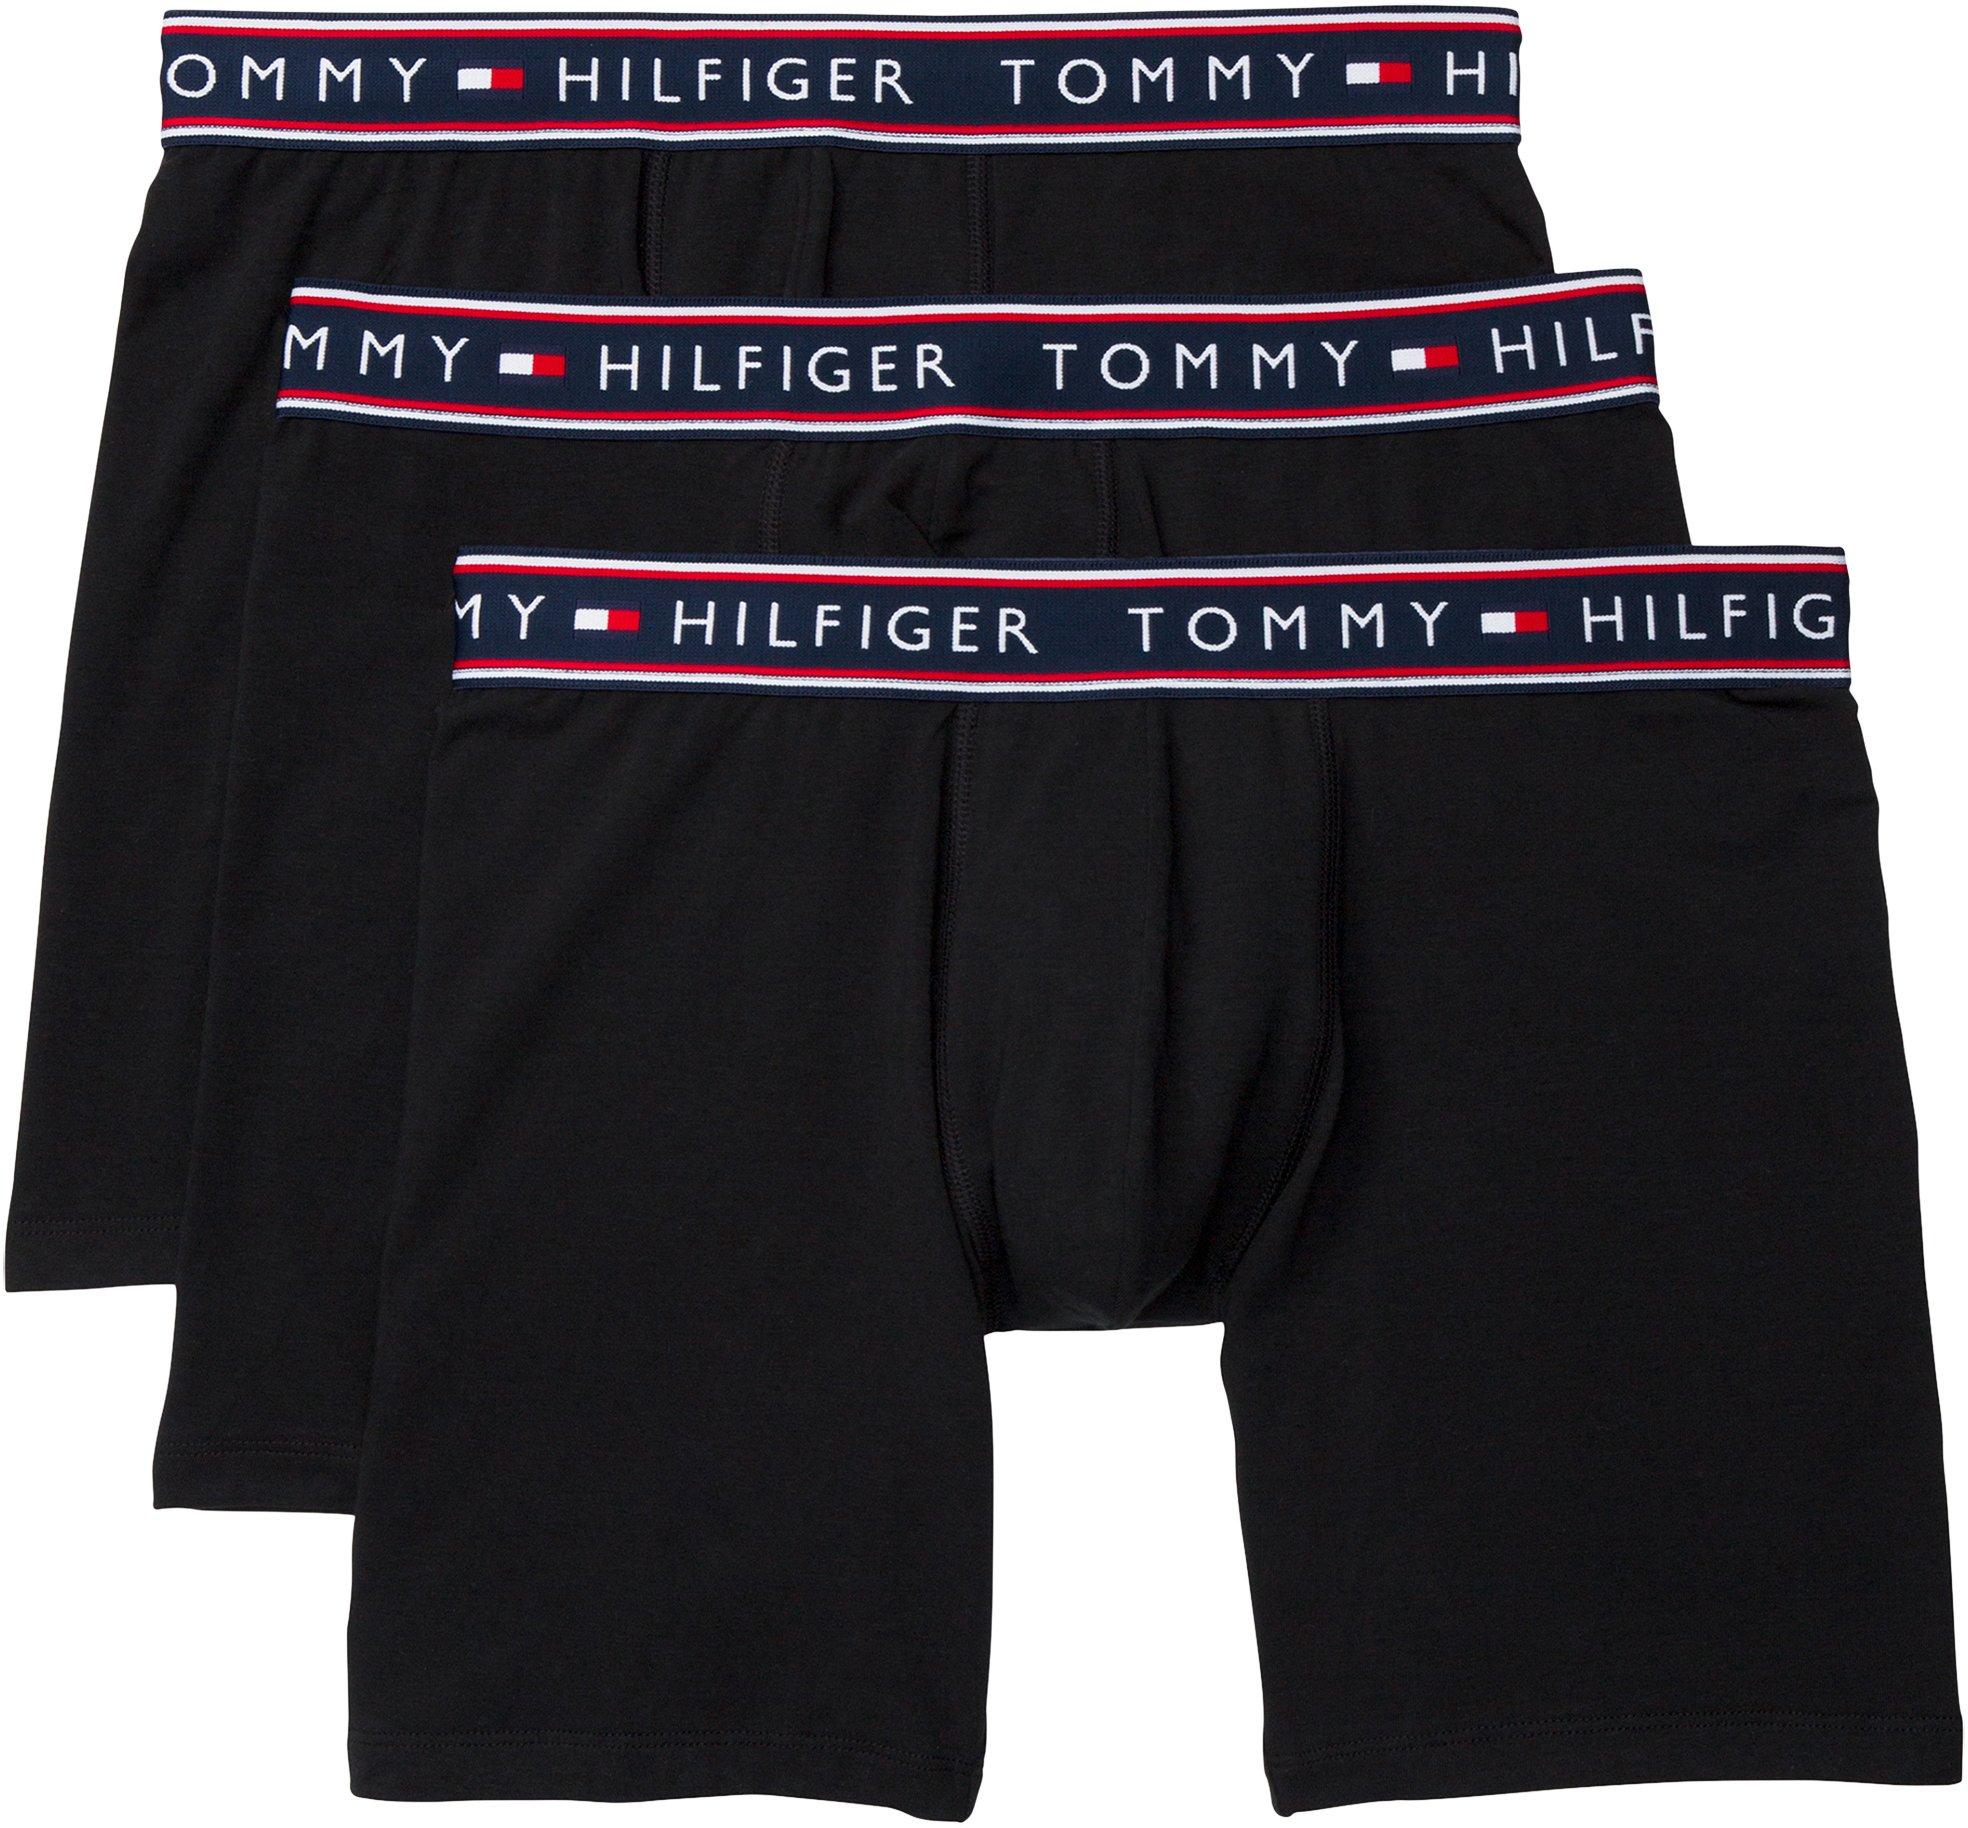 tommy hilfiger boxer briefs 3 pack